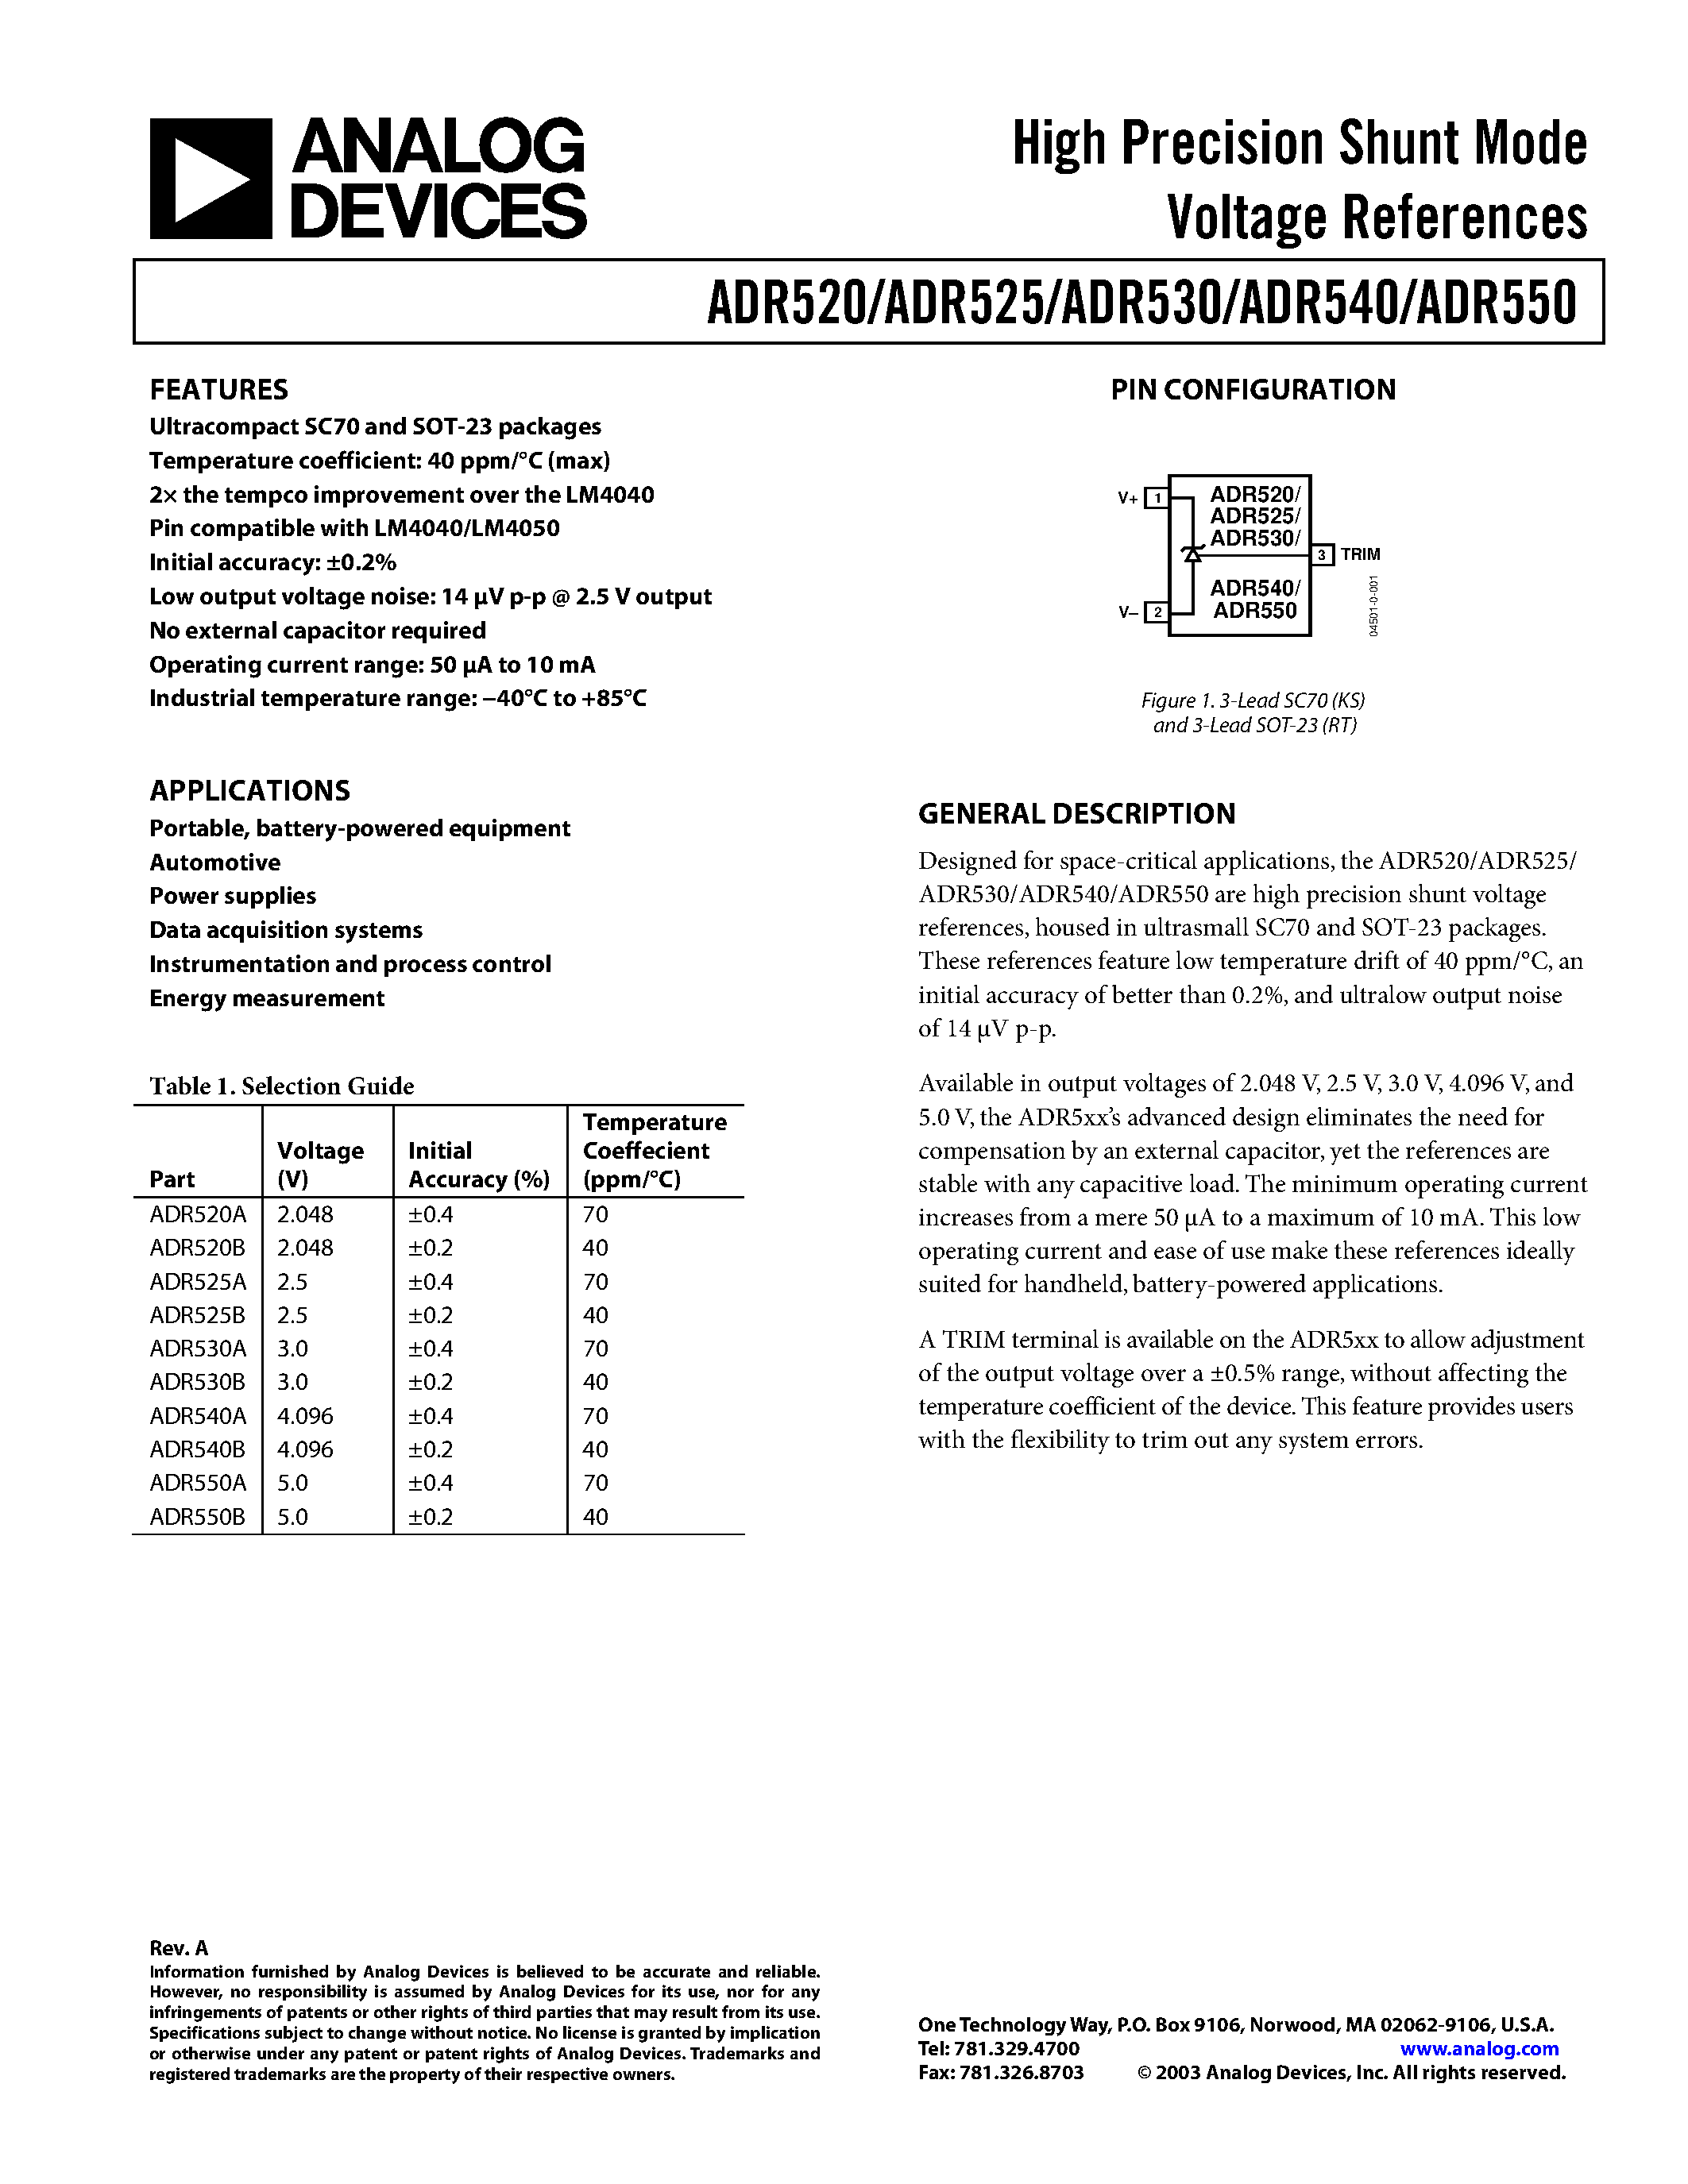 Даташит ADR540ART-R2 - High Precision Shunt Mode Voltage References страница 1